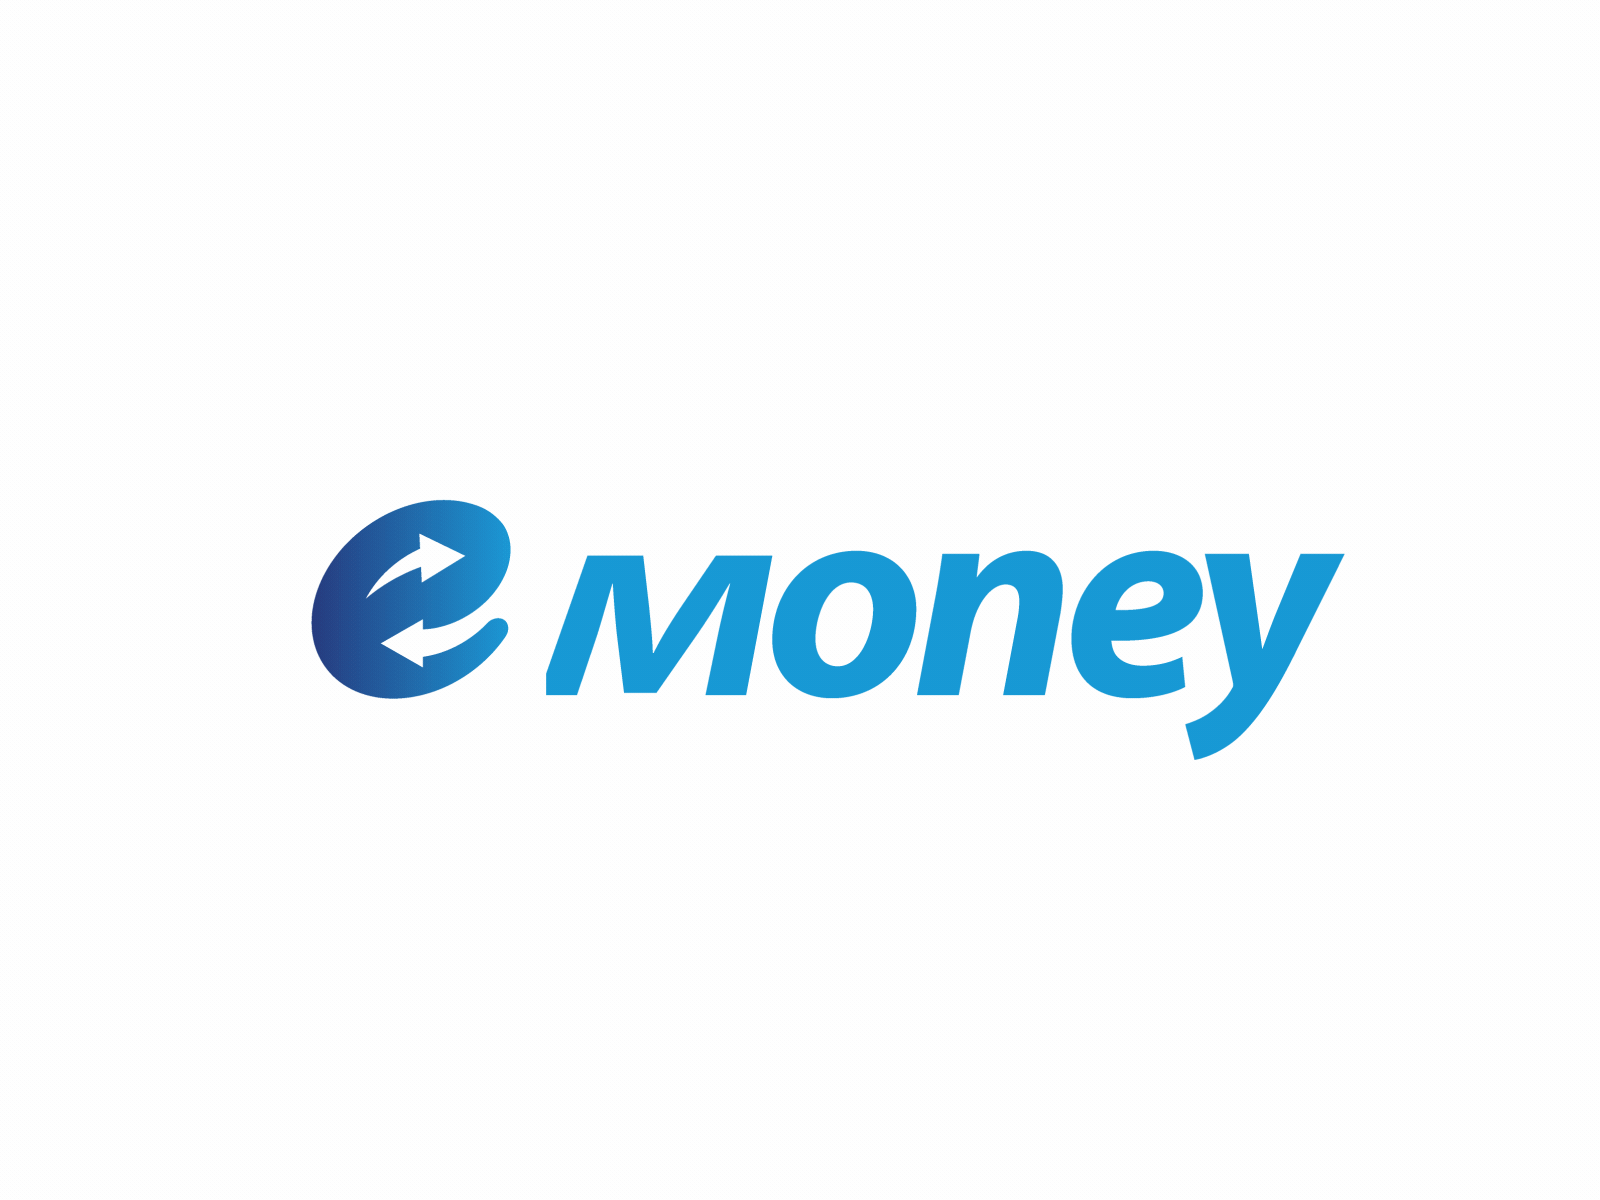 eMoney logotype